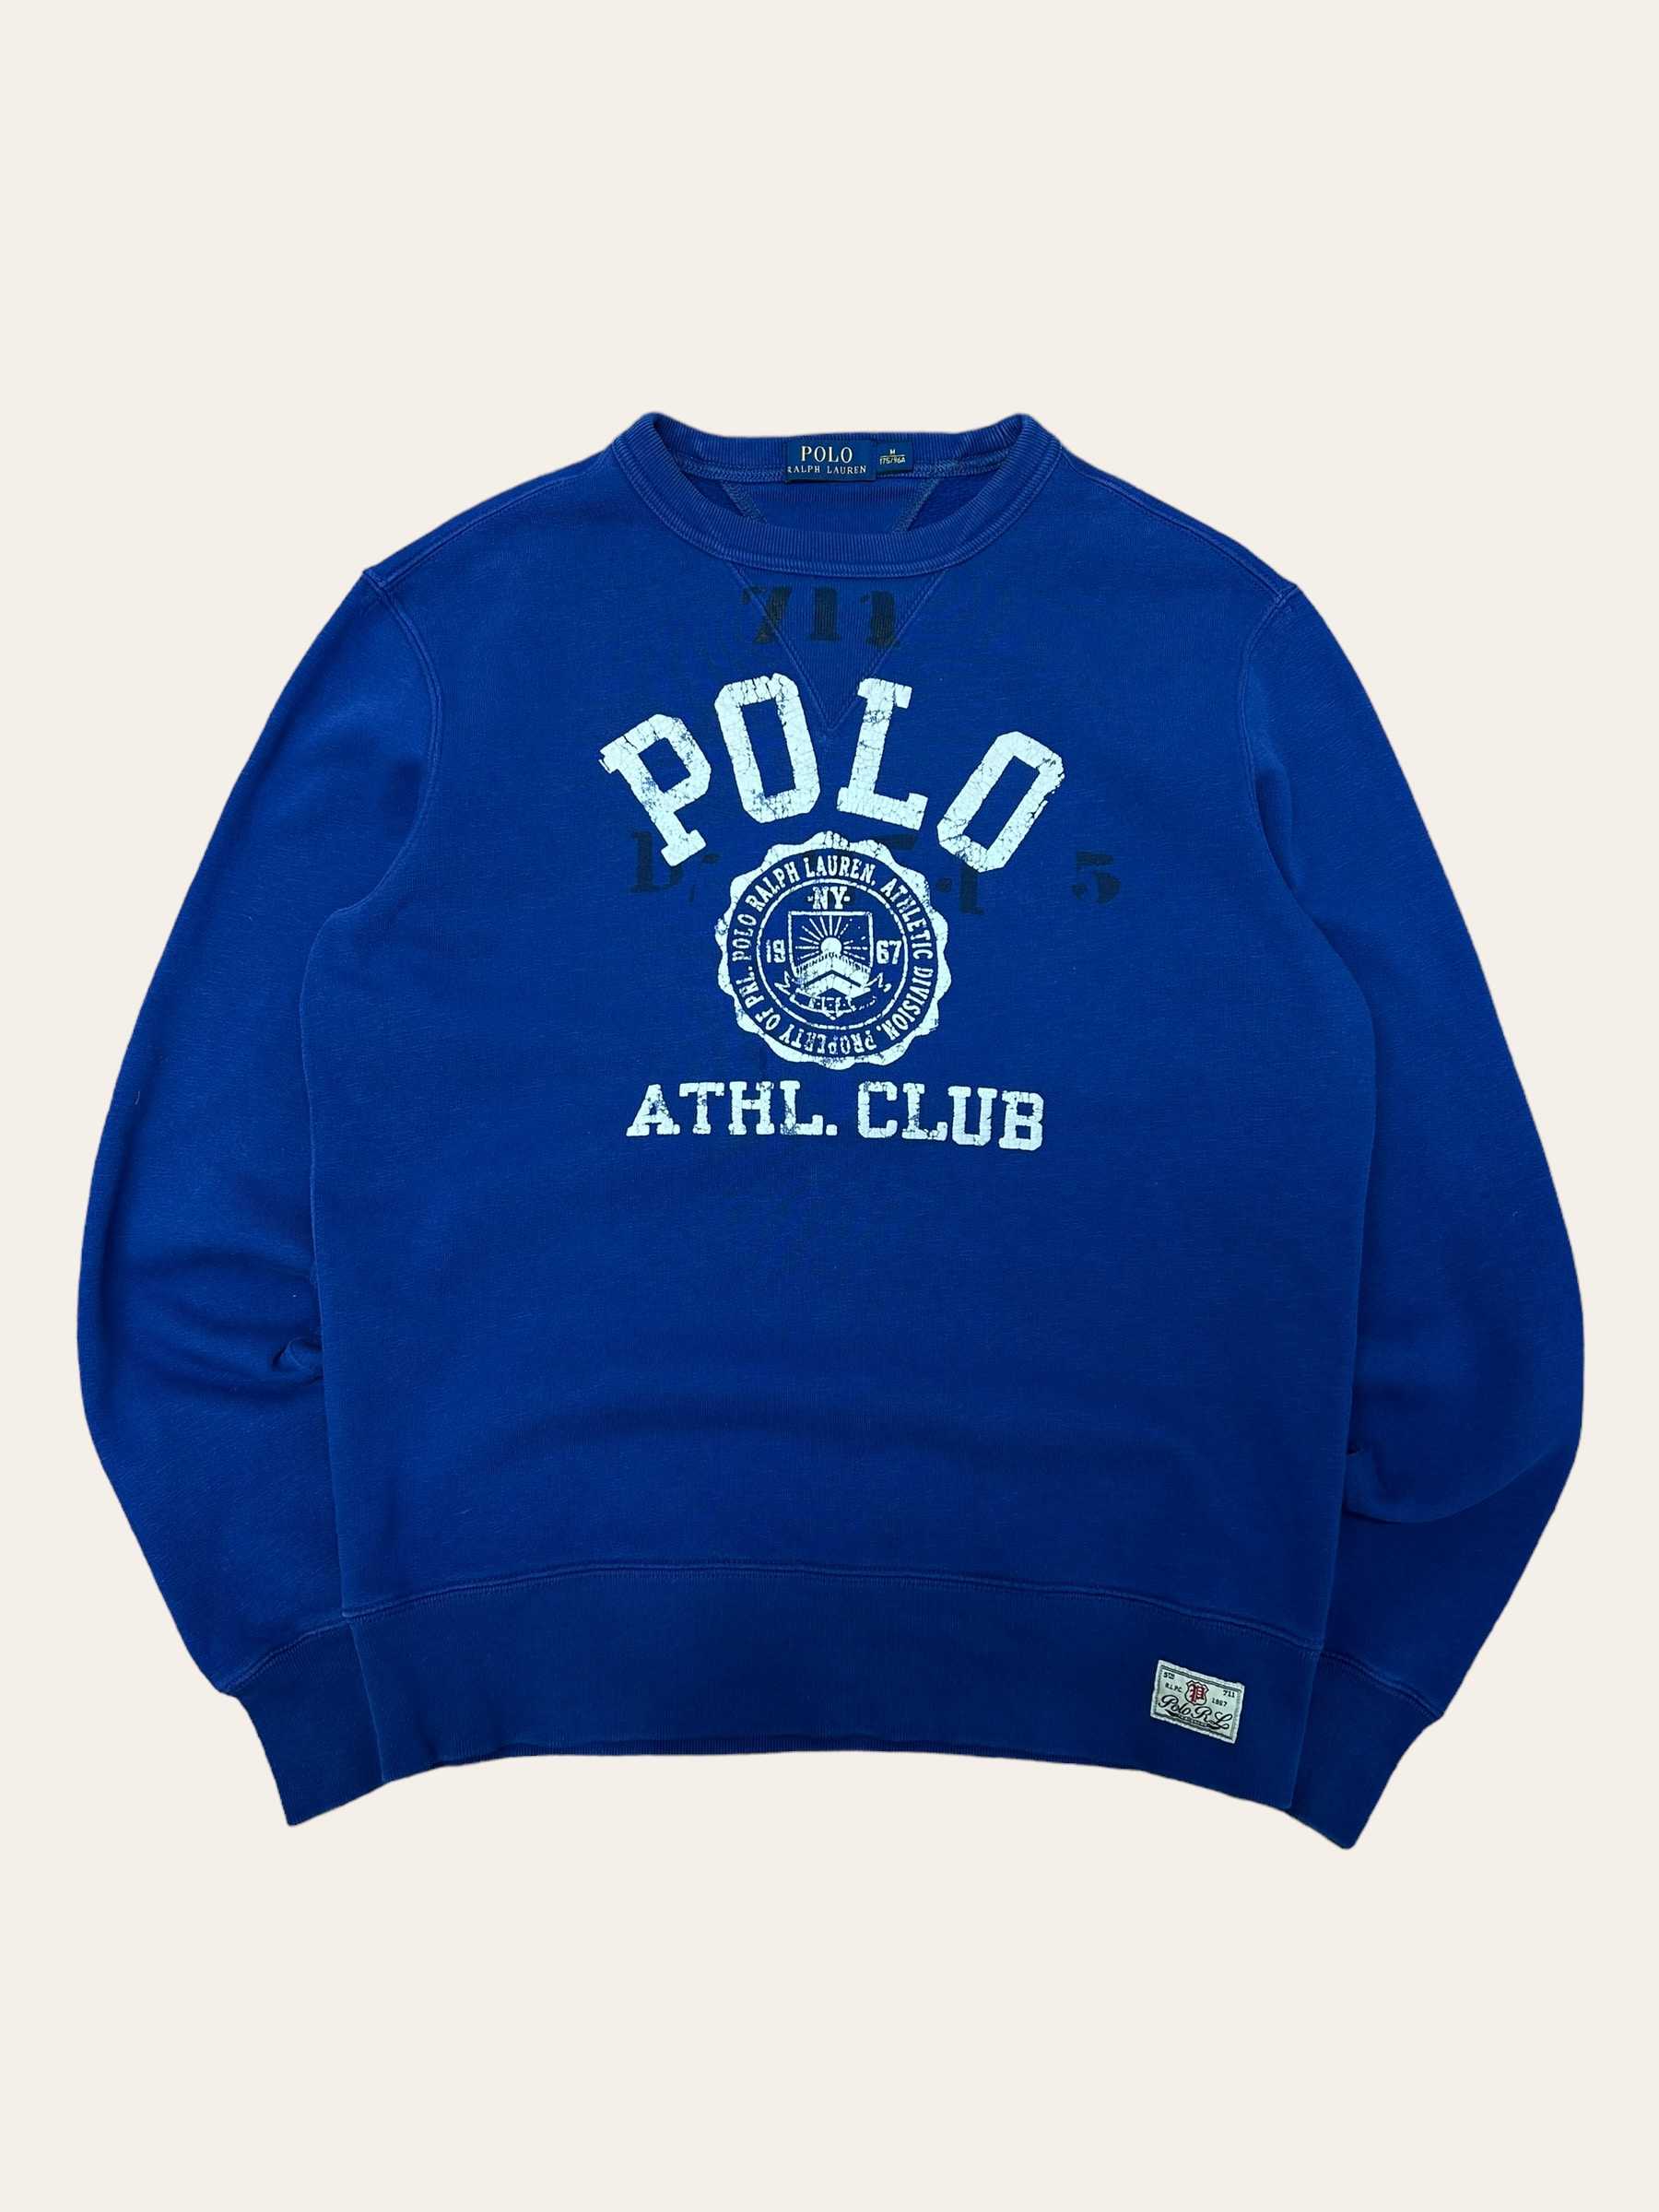 Polo ralph lauren navy blue printing sweatshirt M